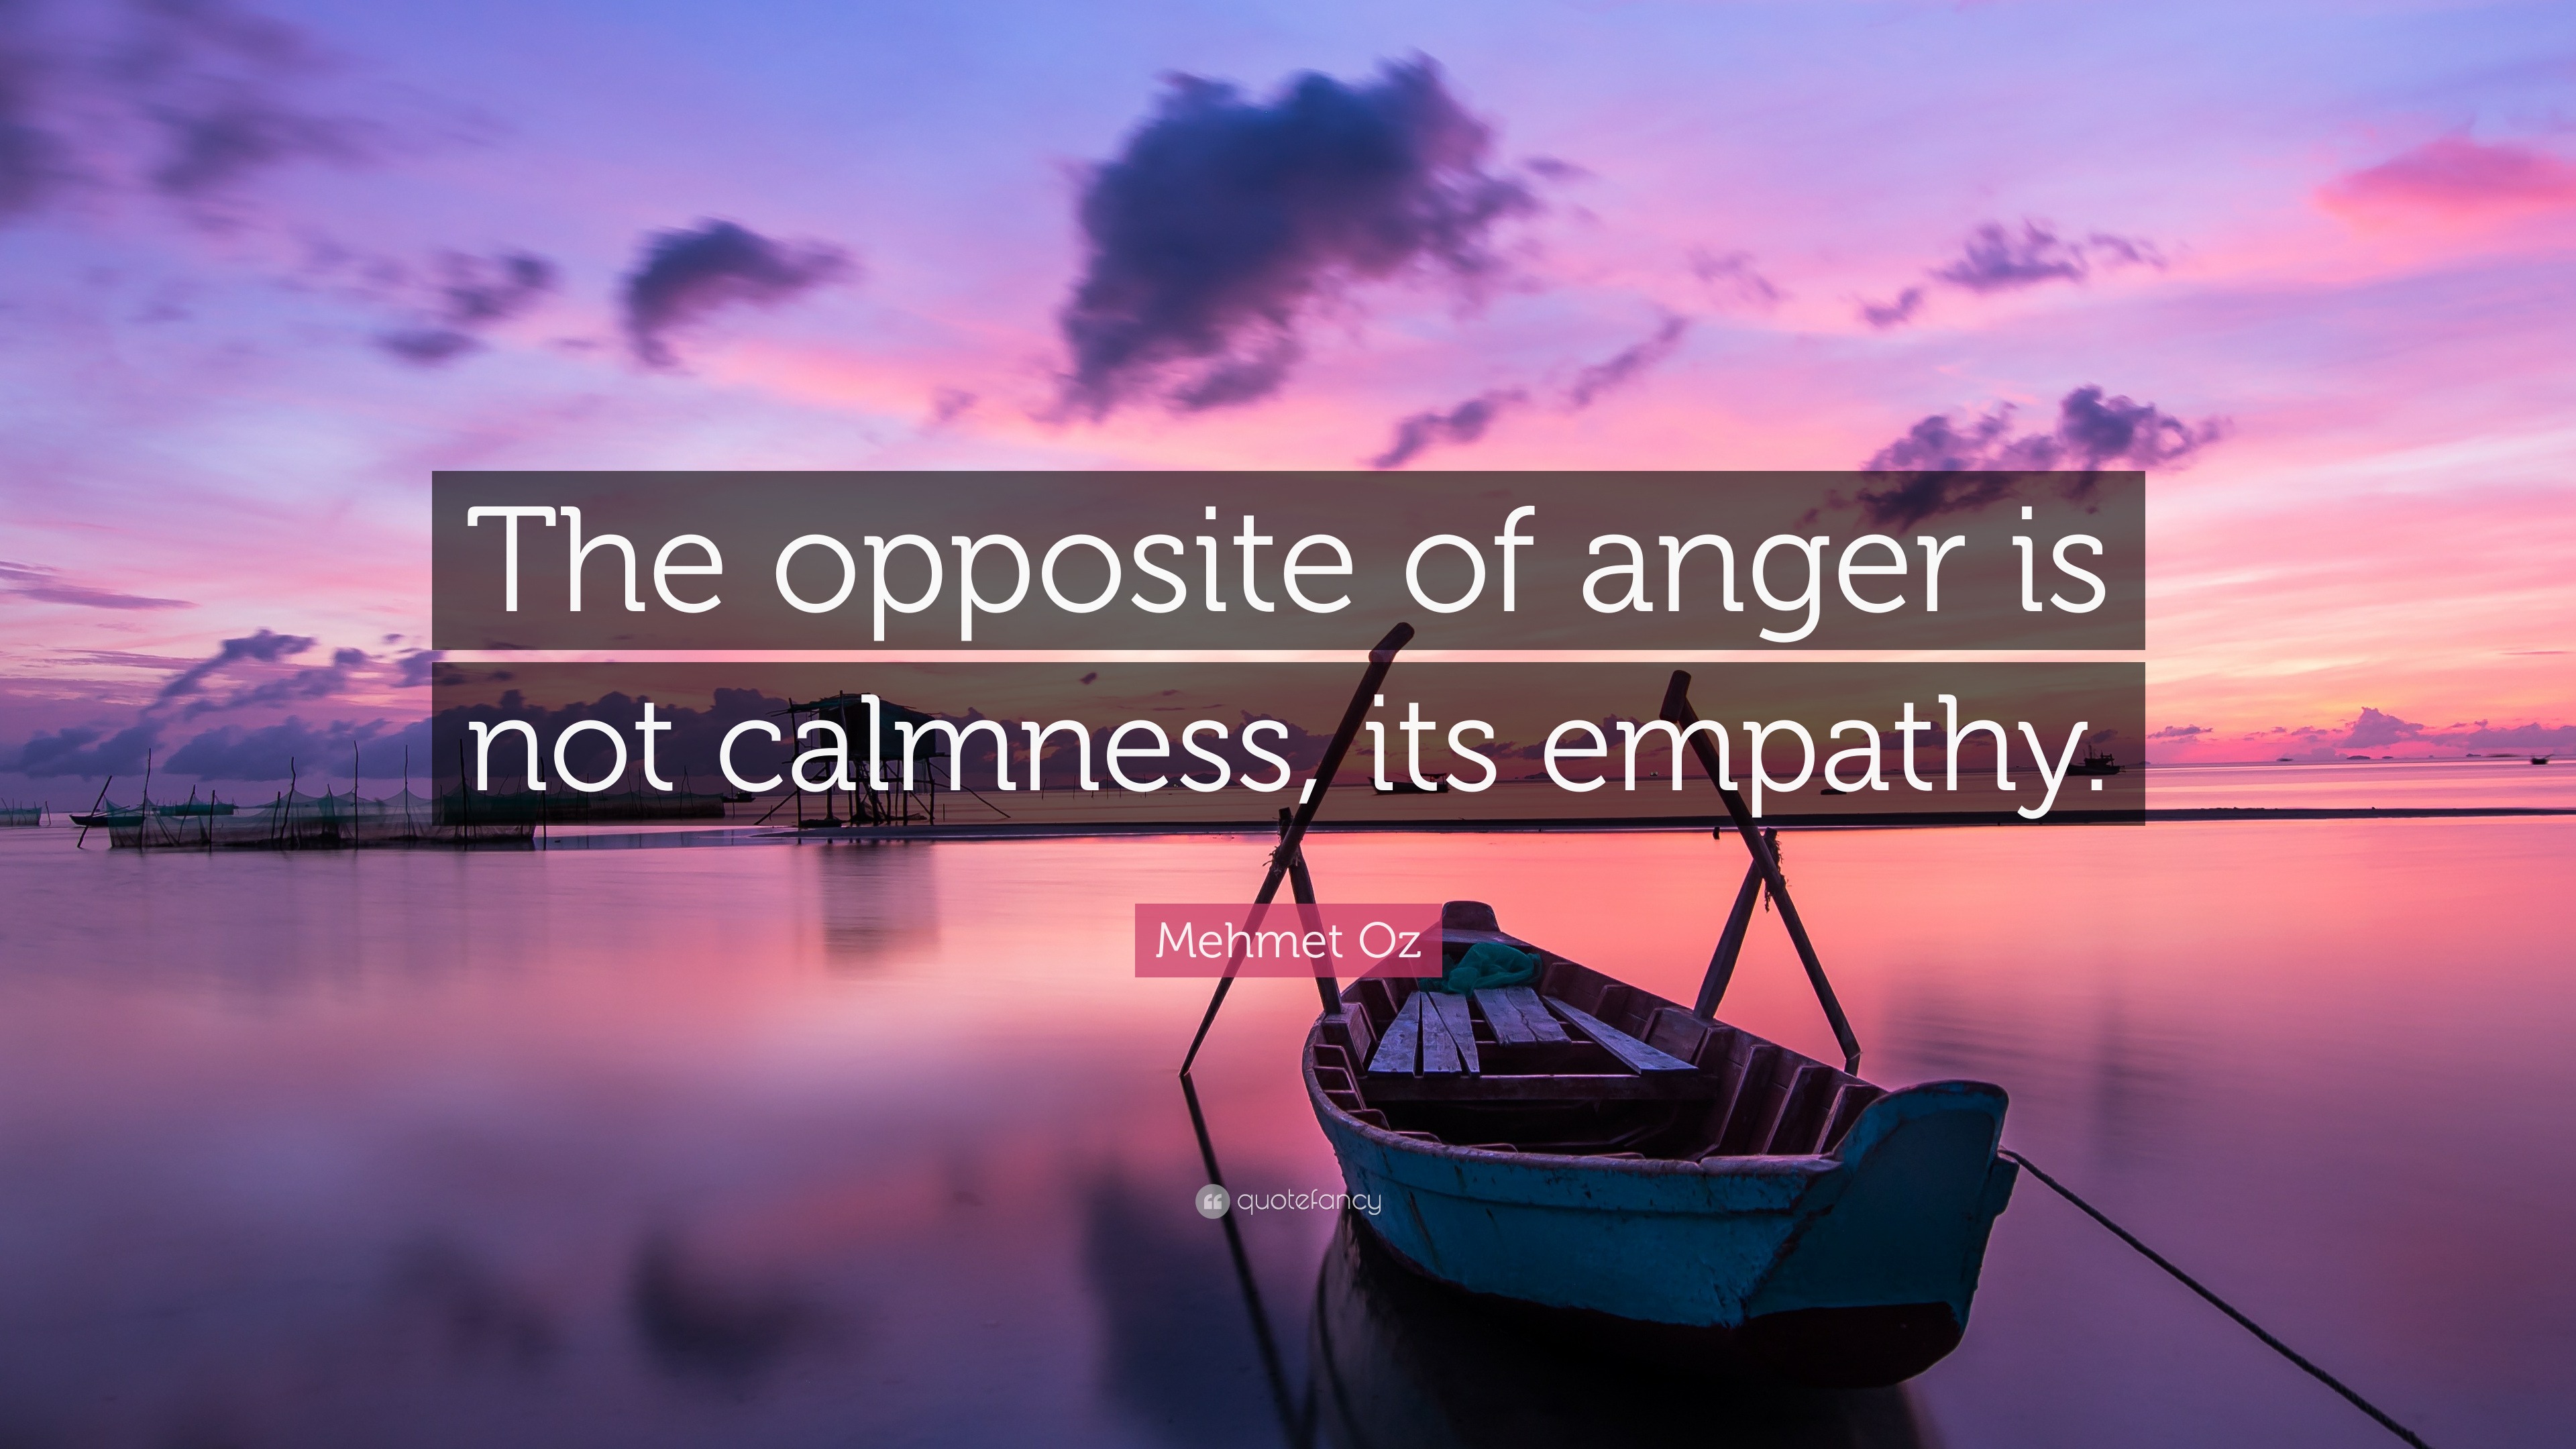 Mehmet Oz Quote: "The opposite of anger is not calmness ...